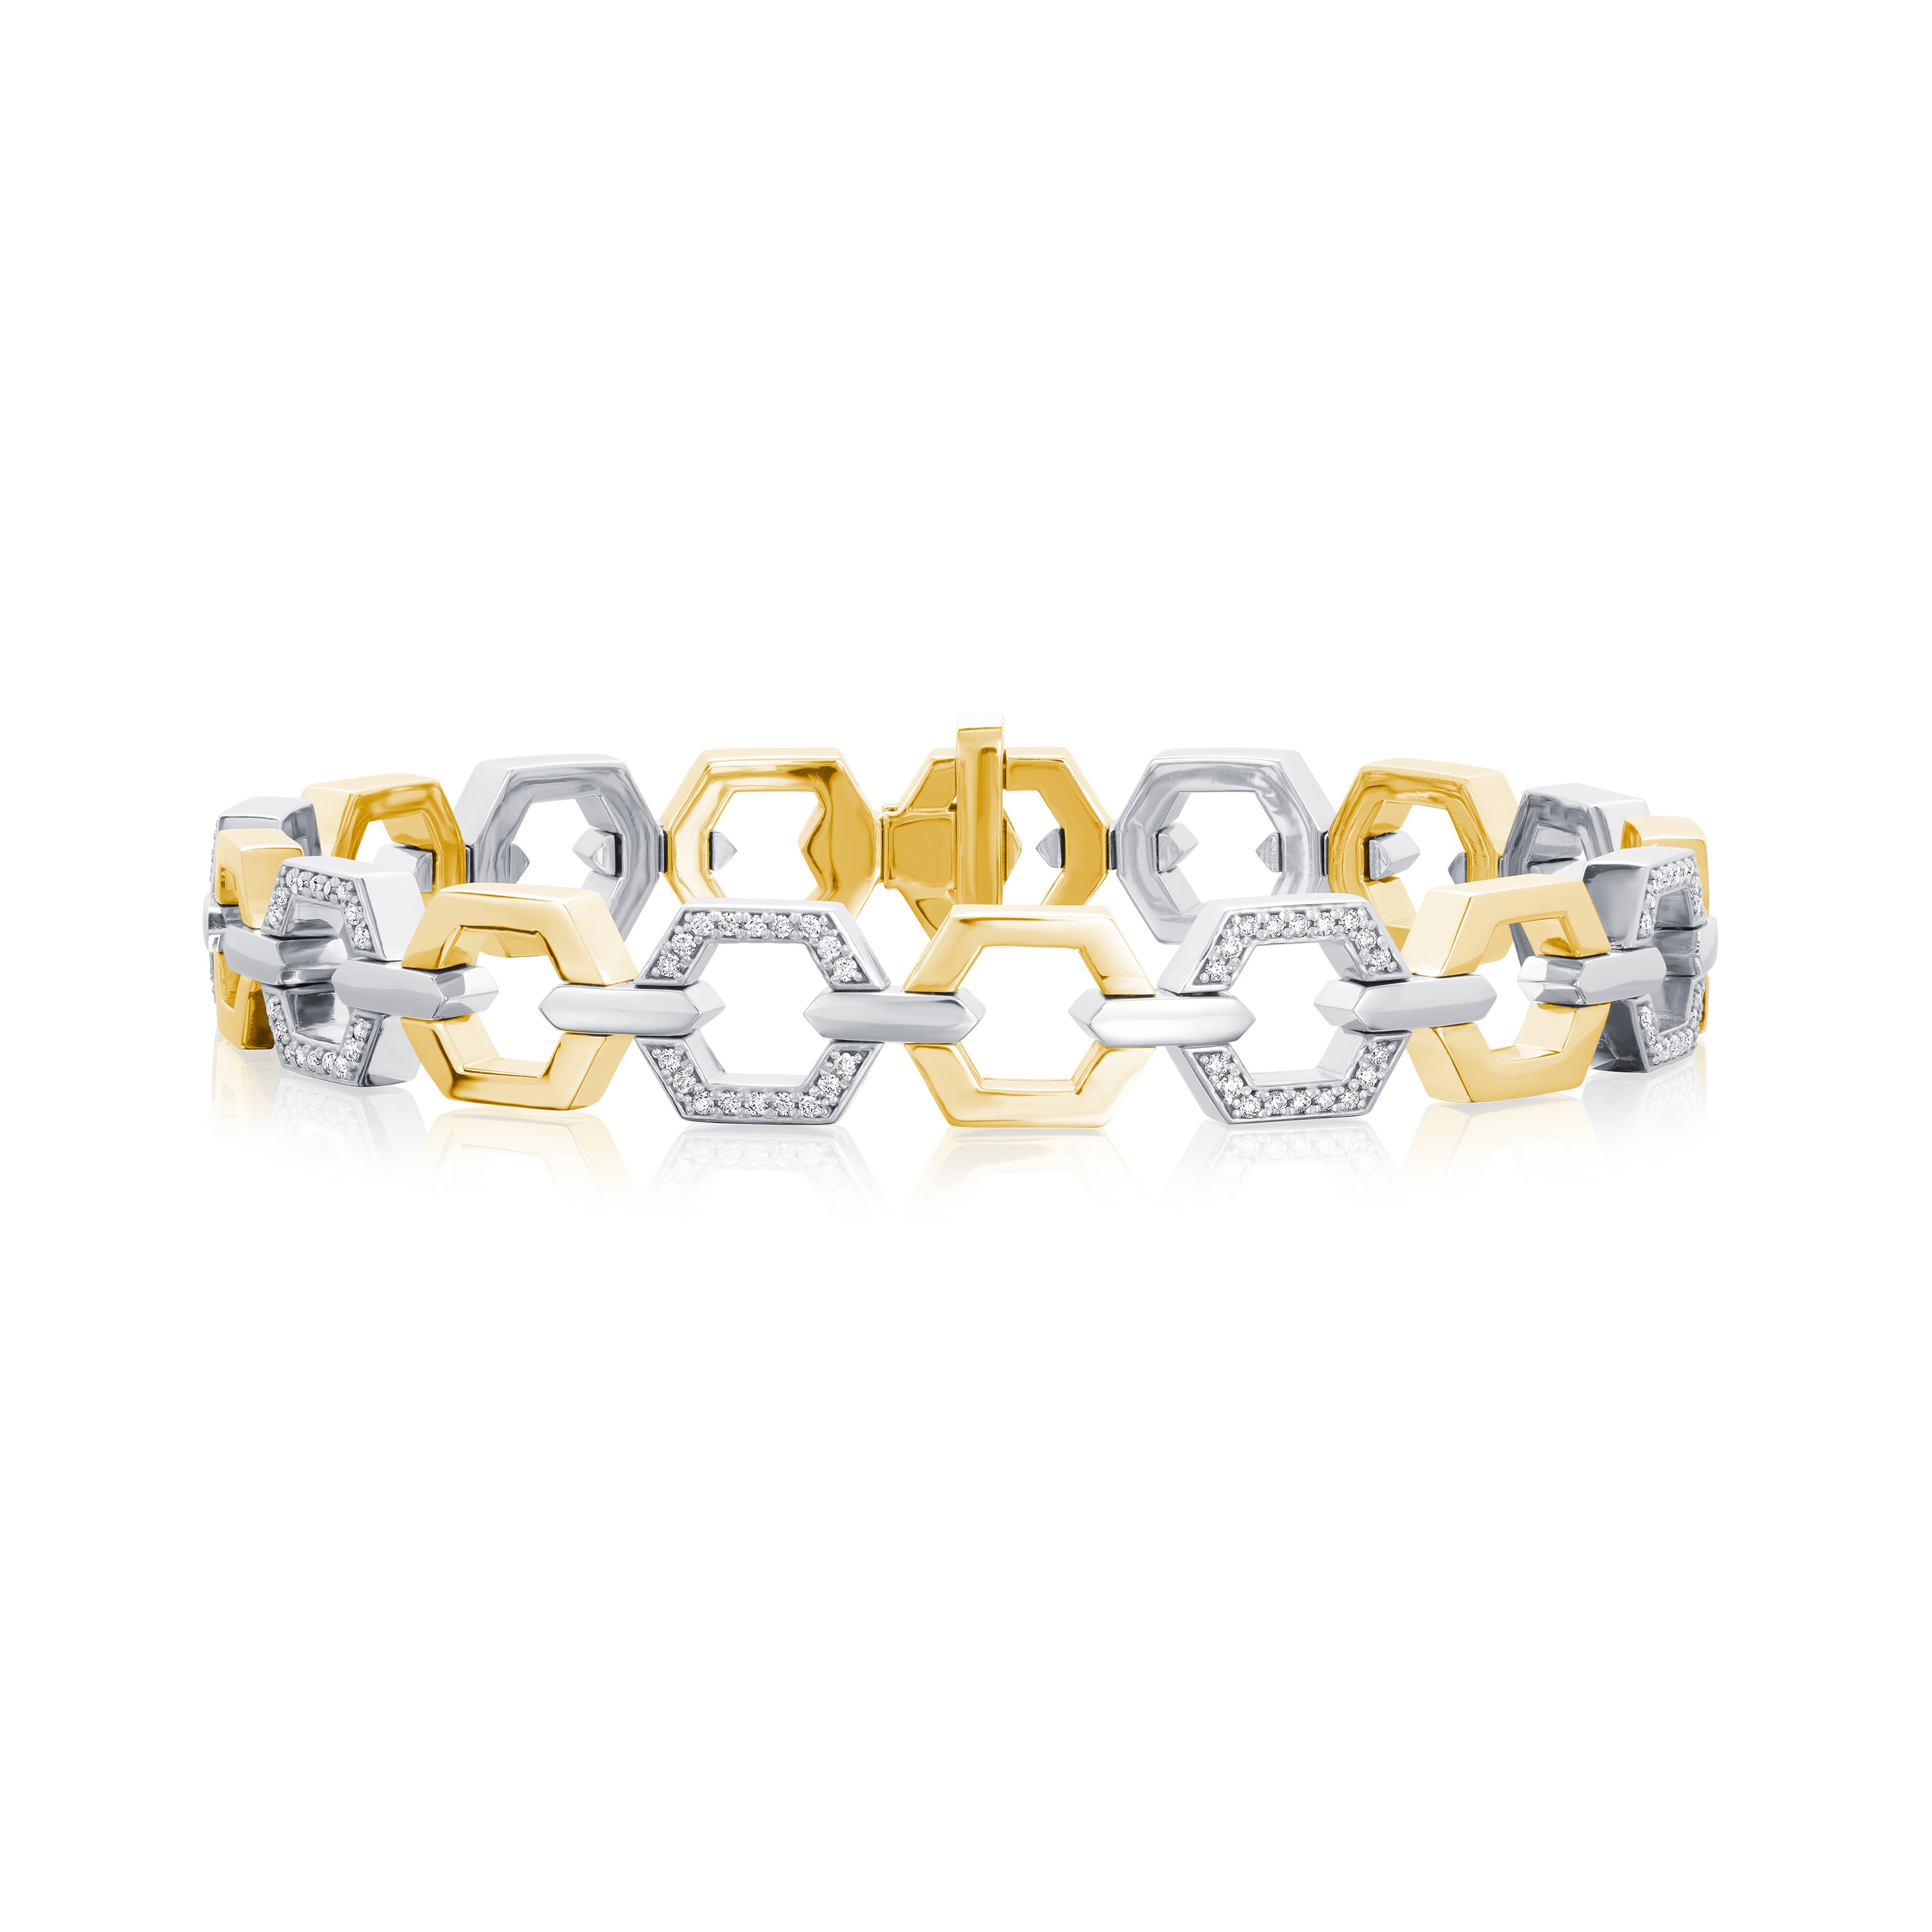 Nectar Yellow Gold Bracelet With Diamond Set Links